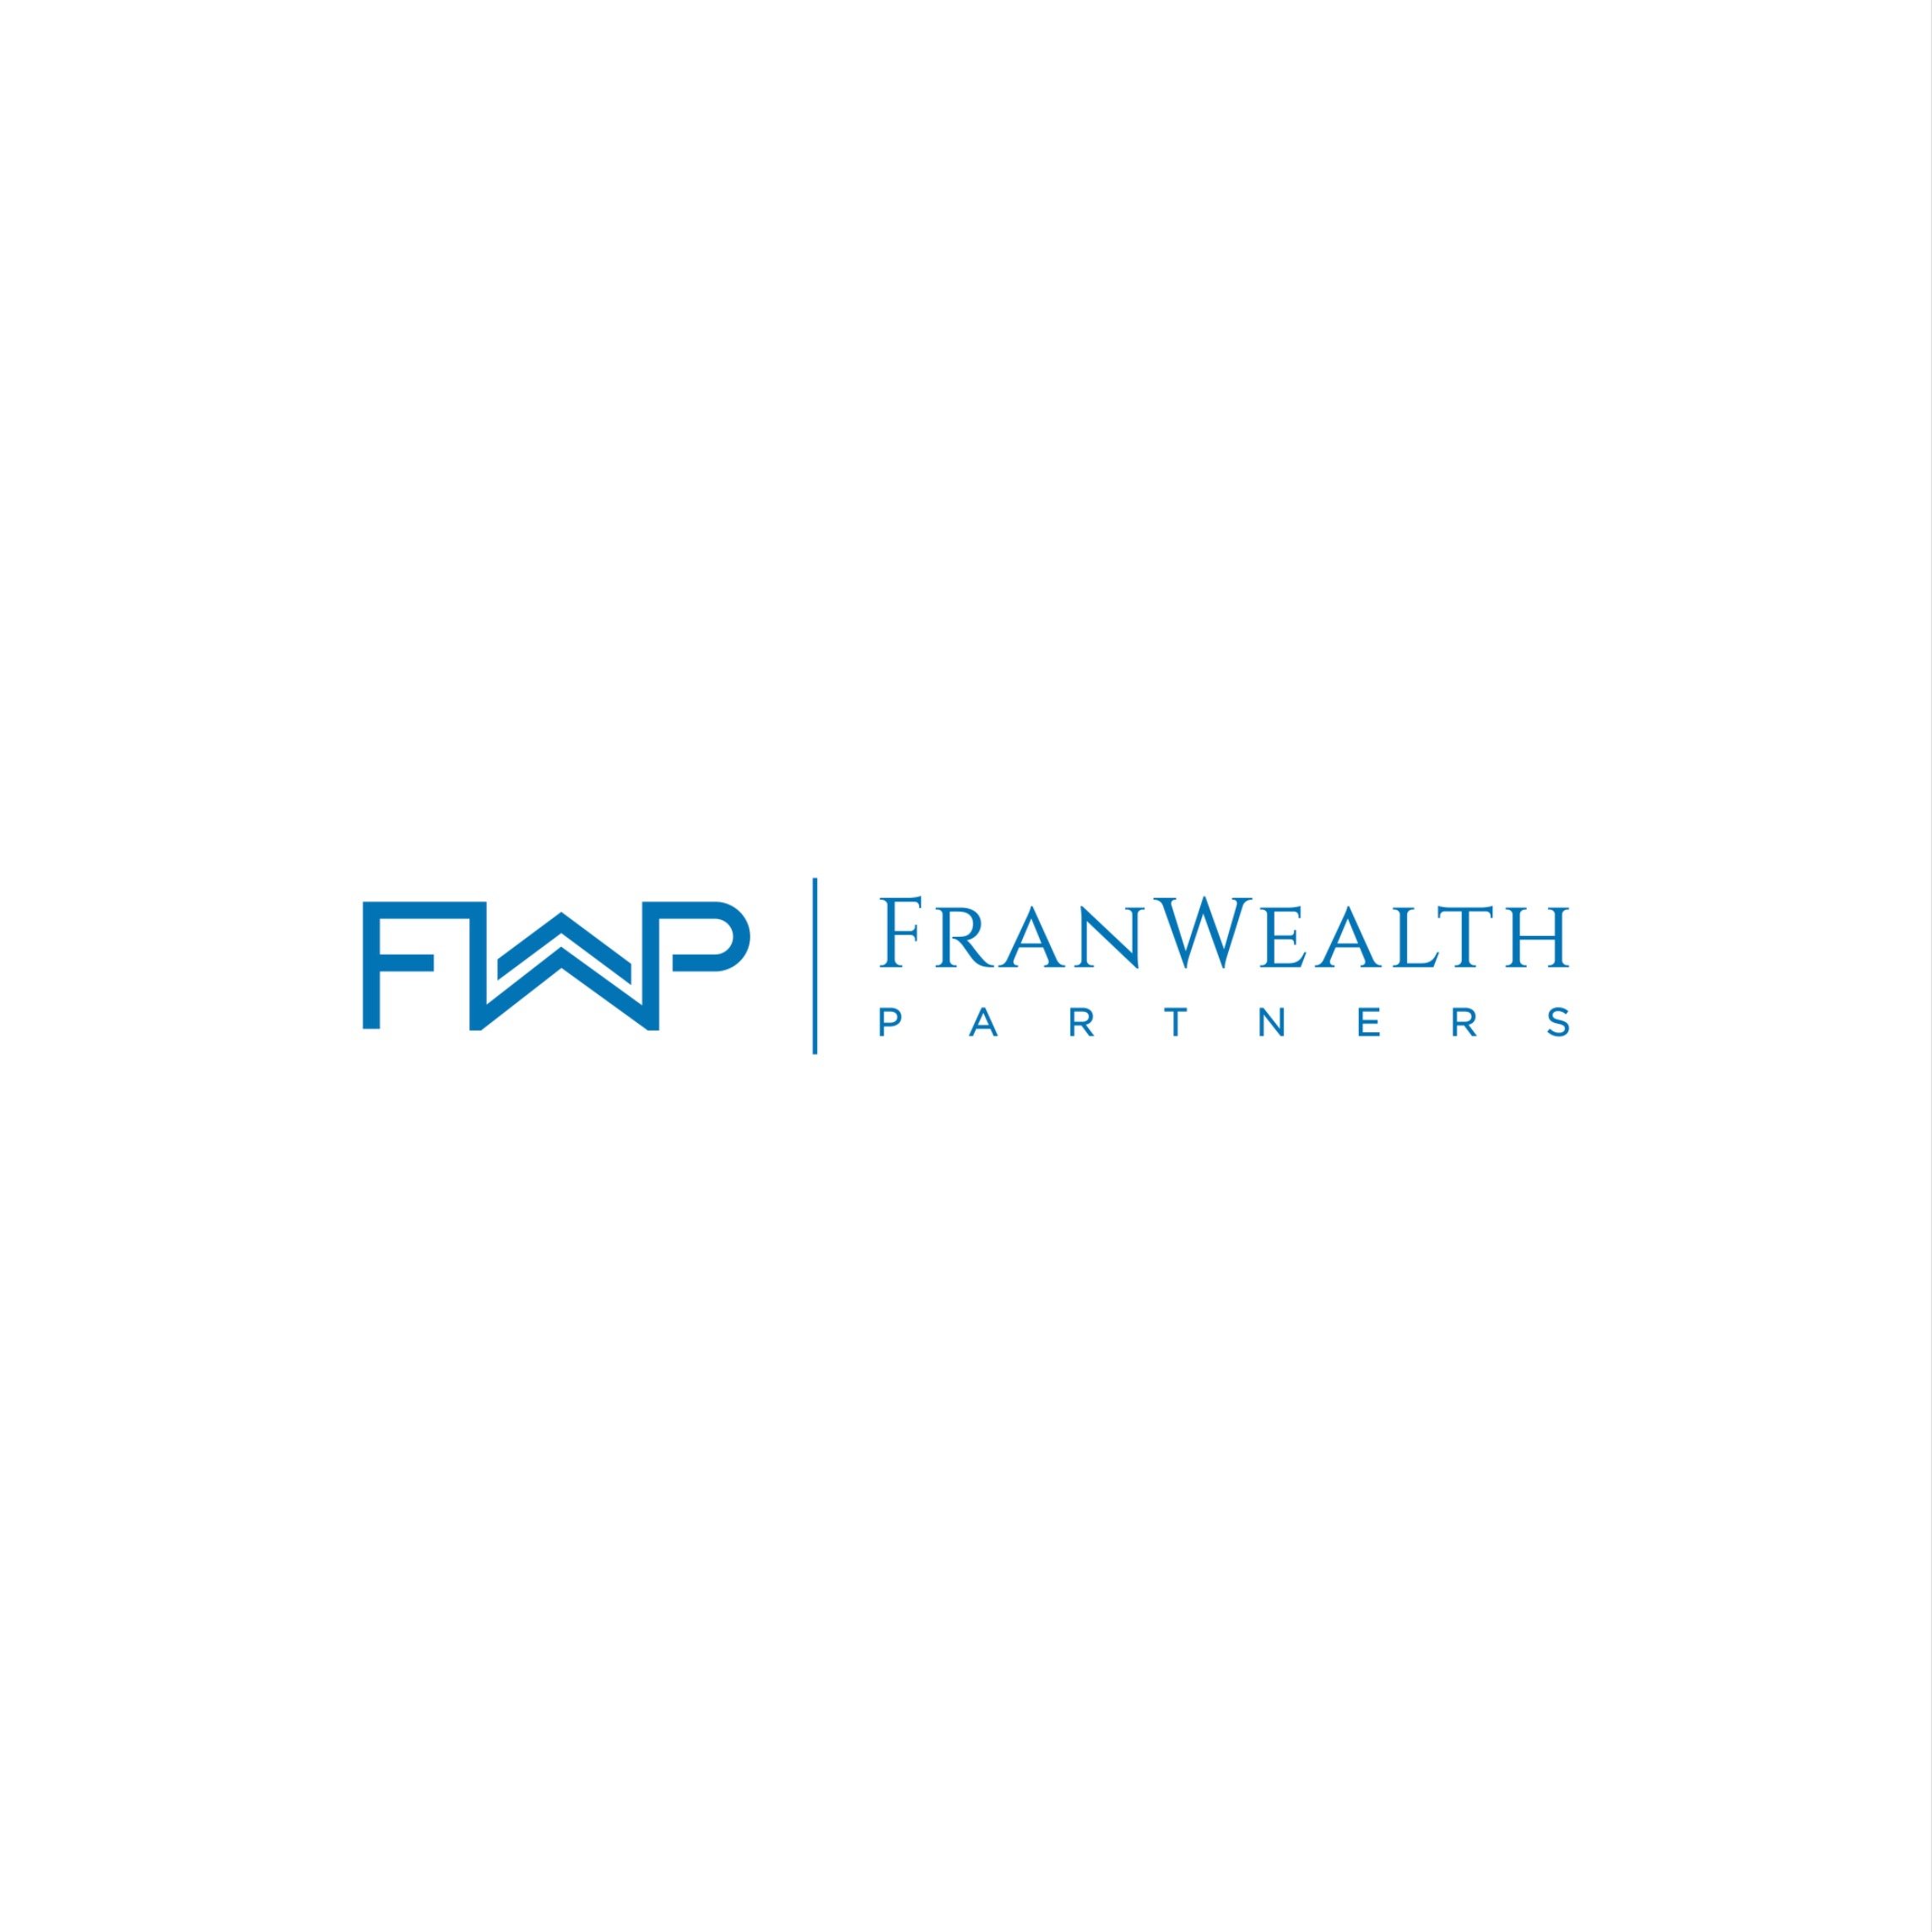 FranWealth Partners